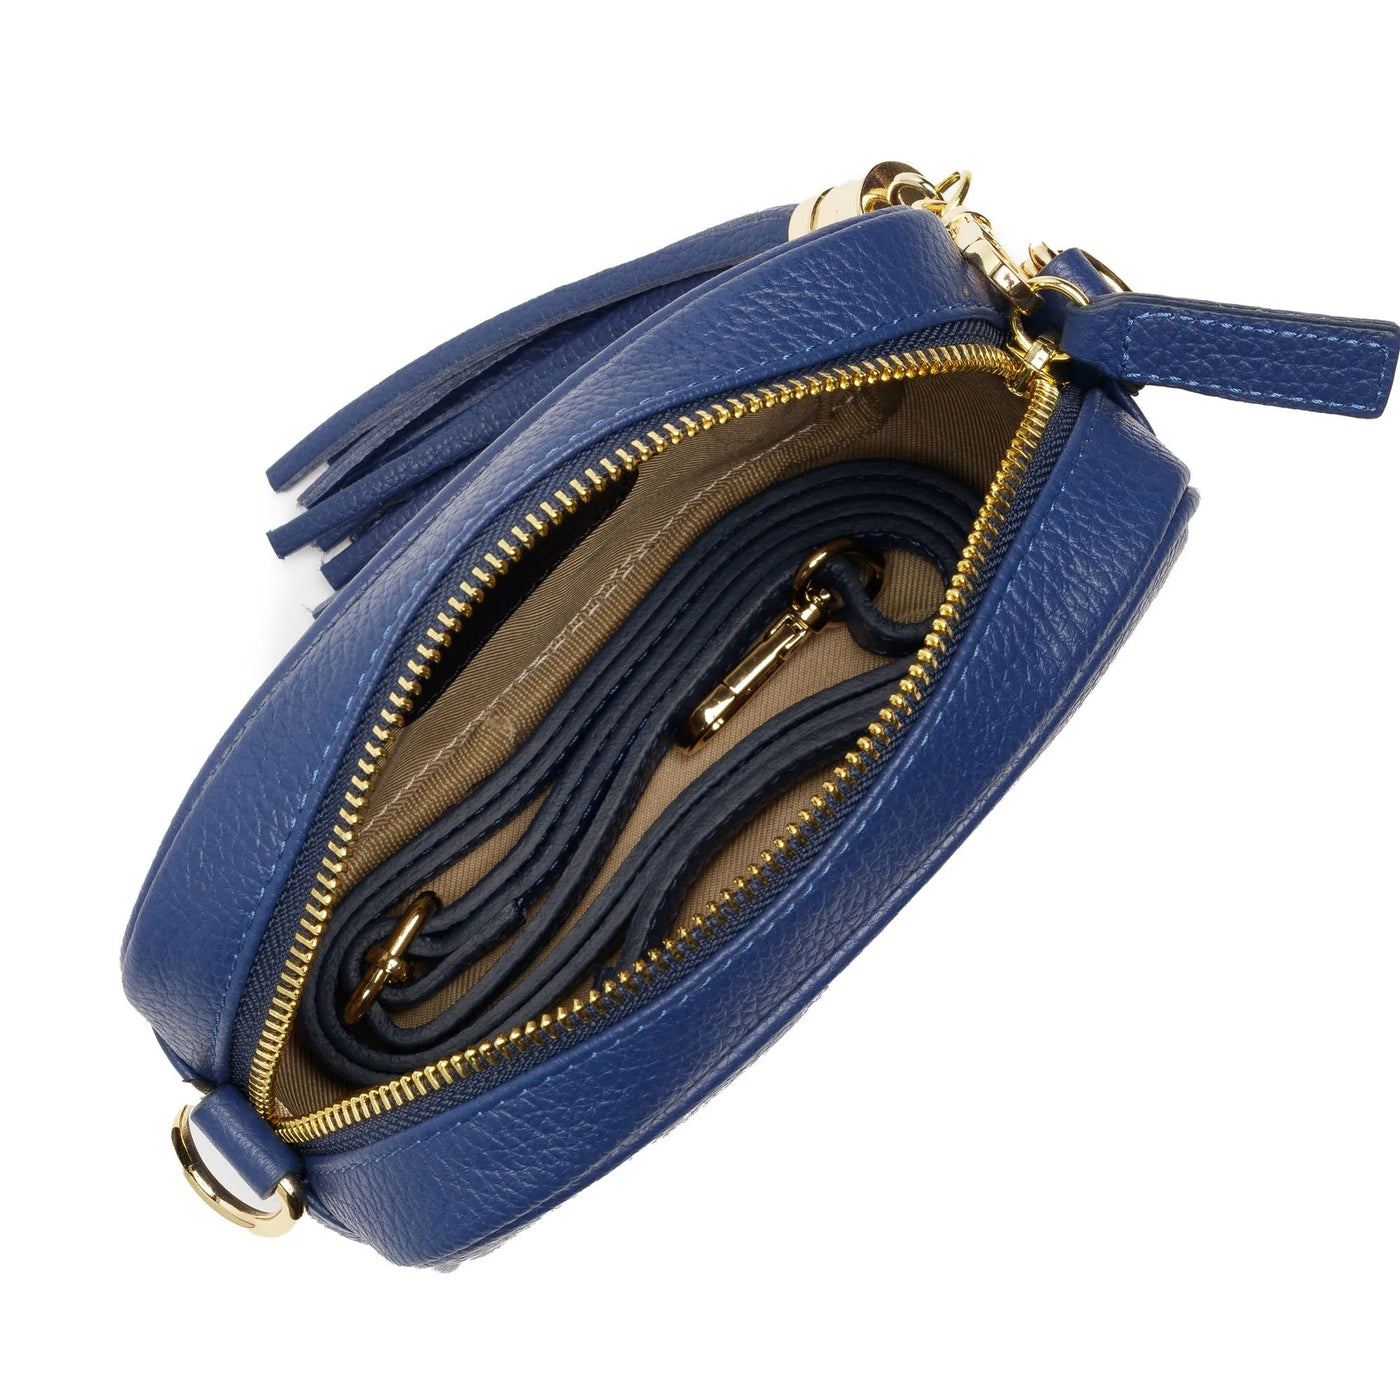 Elie Beaumont Designer Leather MINI Crossbody Bag - Denim Blue (GOLD Fittings)